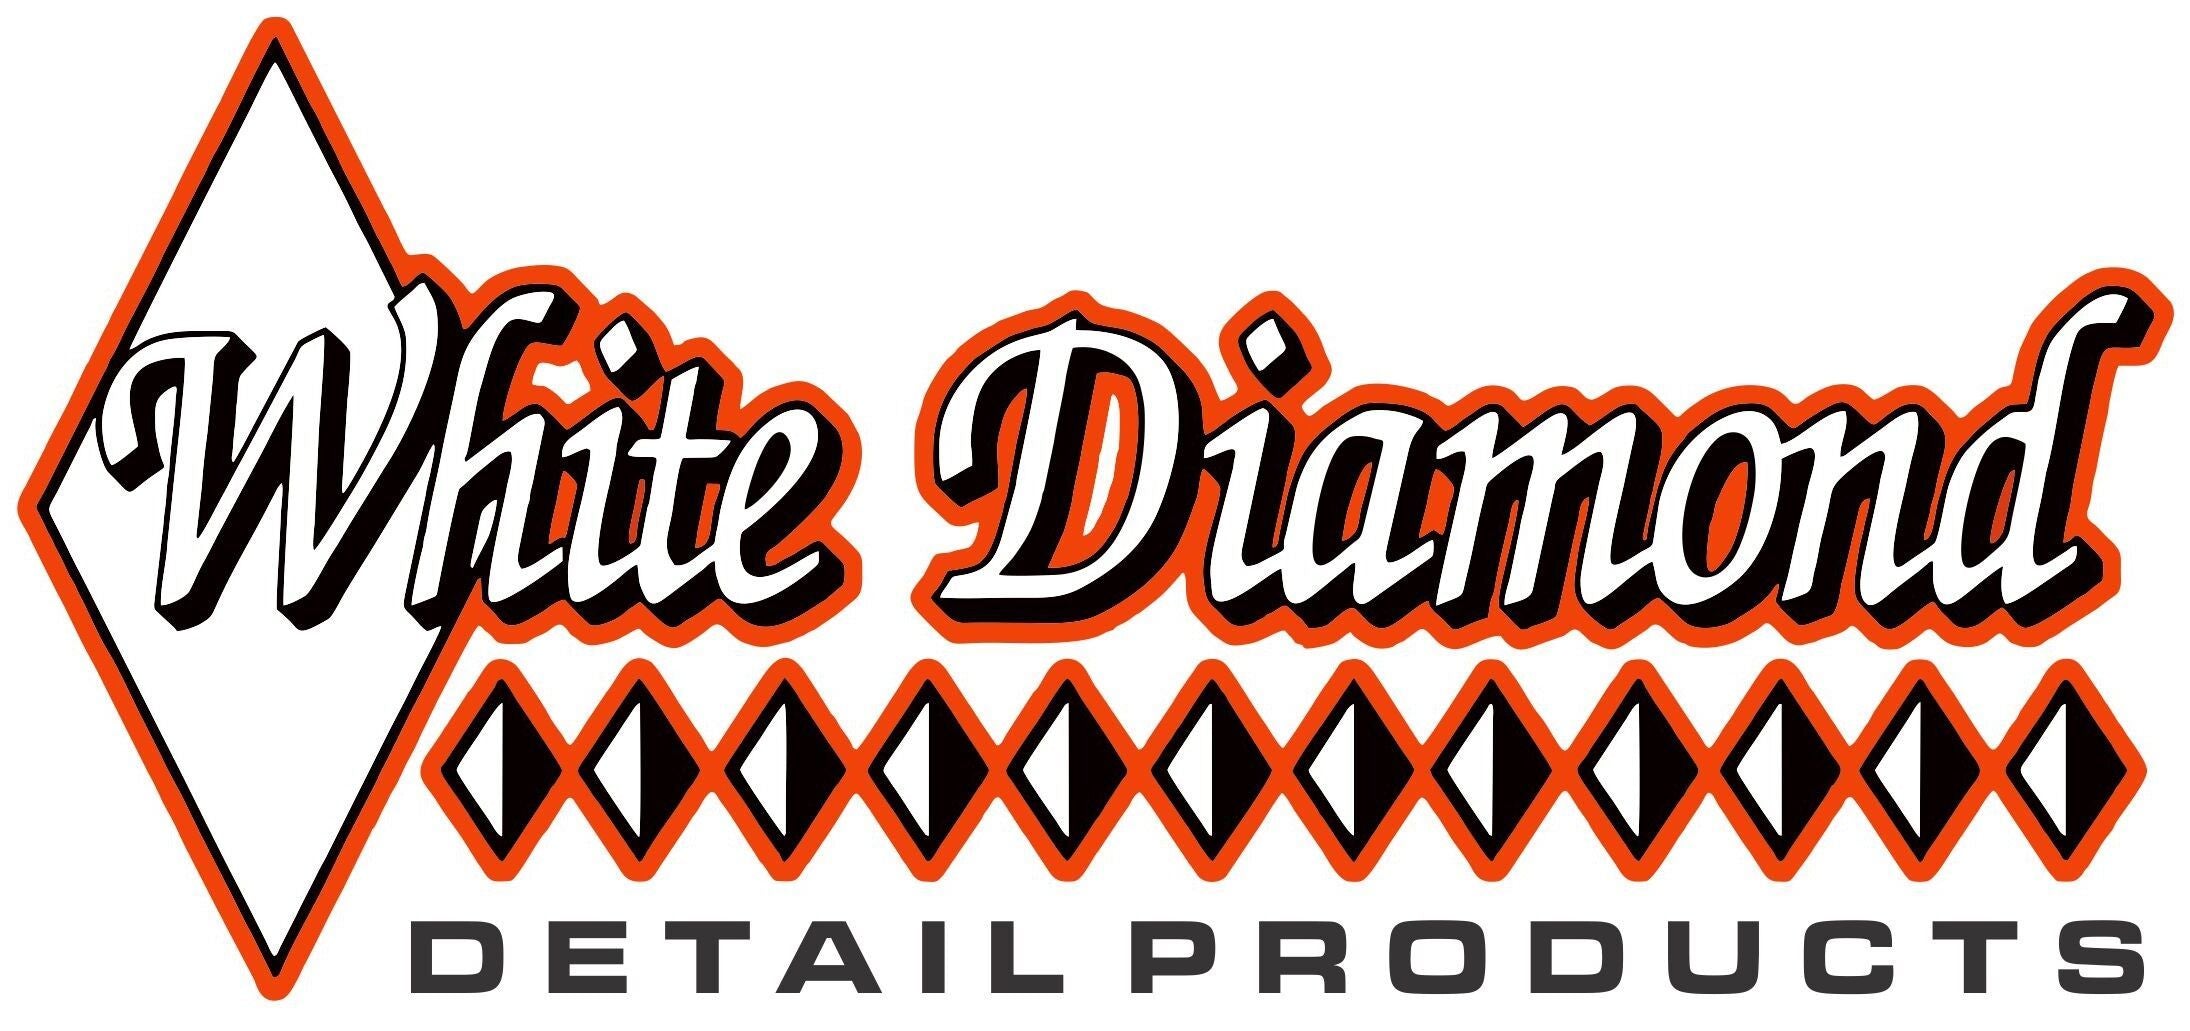 White Diamond Detail Products  Buy Premium Quality Detailing Supplies